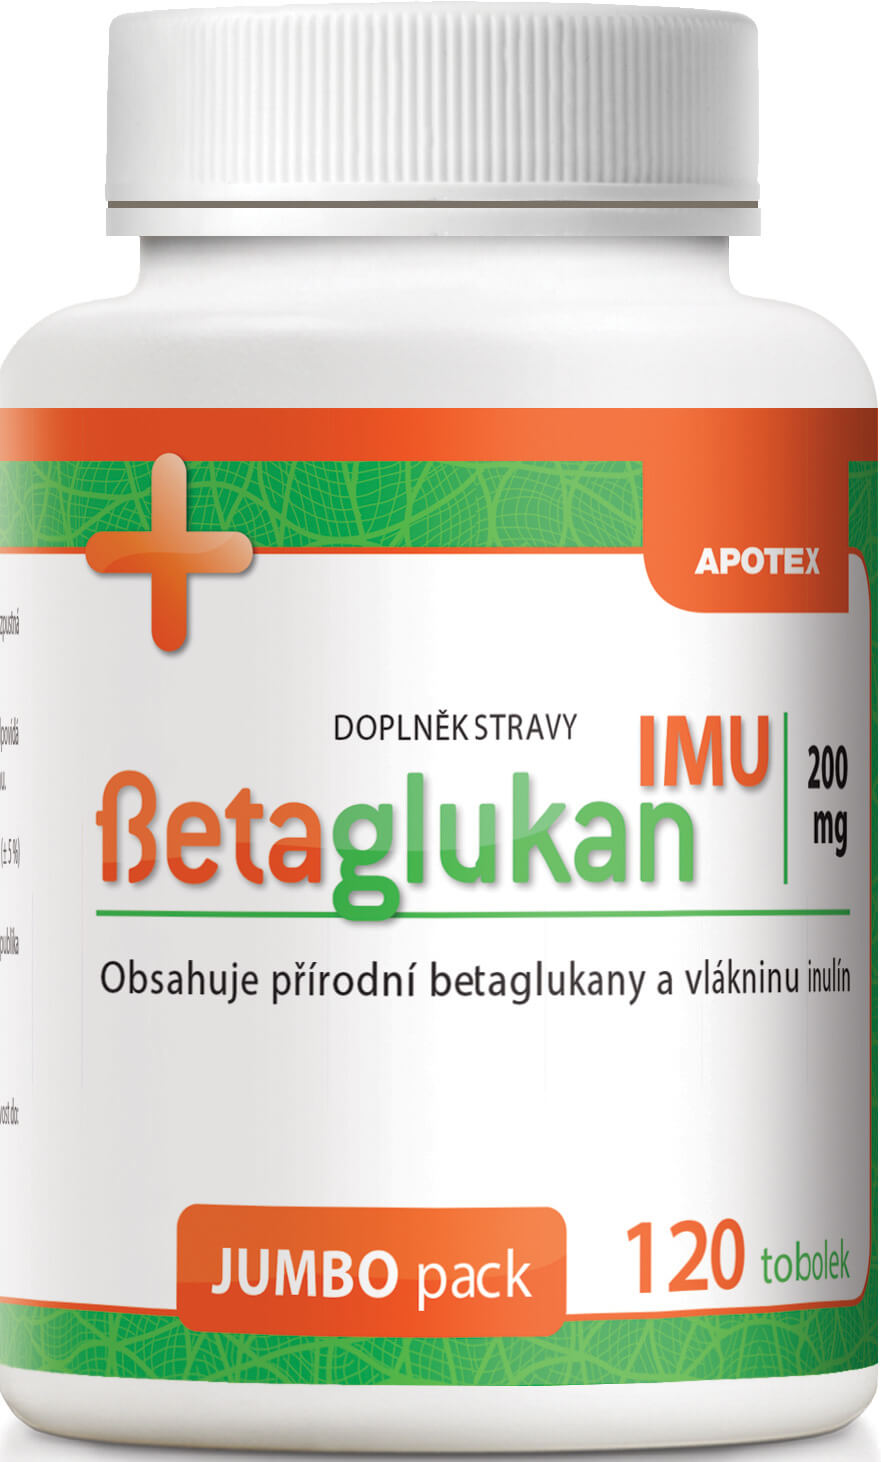 Zobrazit detail výrobku Aurovitas Betaglukan IMU 200 mg 120 tob.